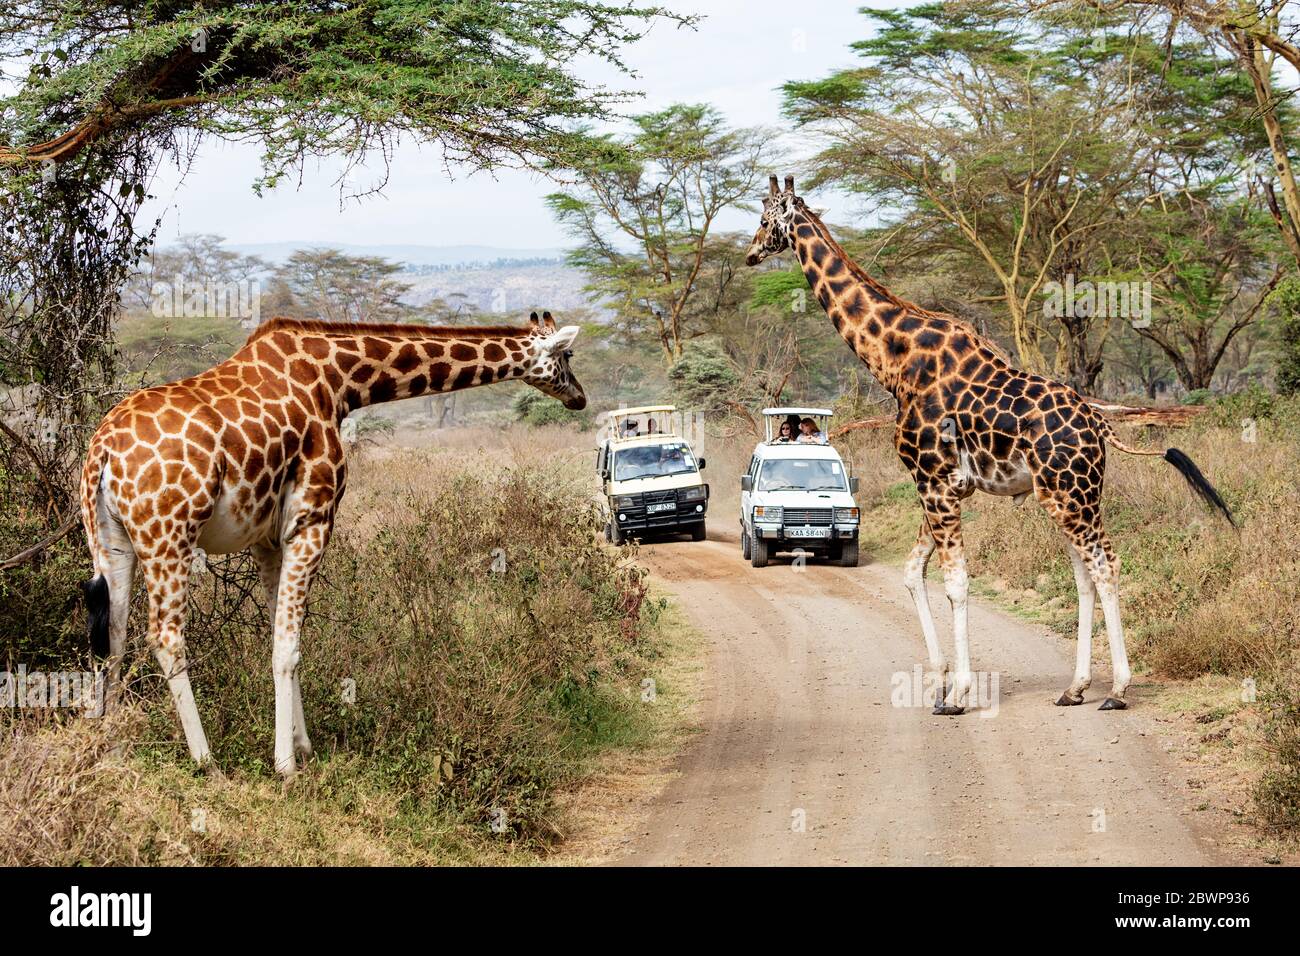 Lake Nakuru, Kenya/Africa - February 16, 2019: Two endangered Rotheschild's Giraffe cross a road while tourists in safari vehicles watch and photograp Stock Photo